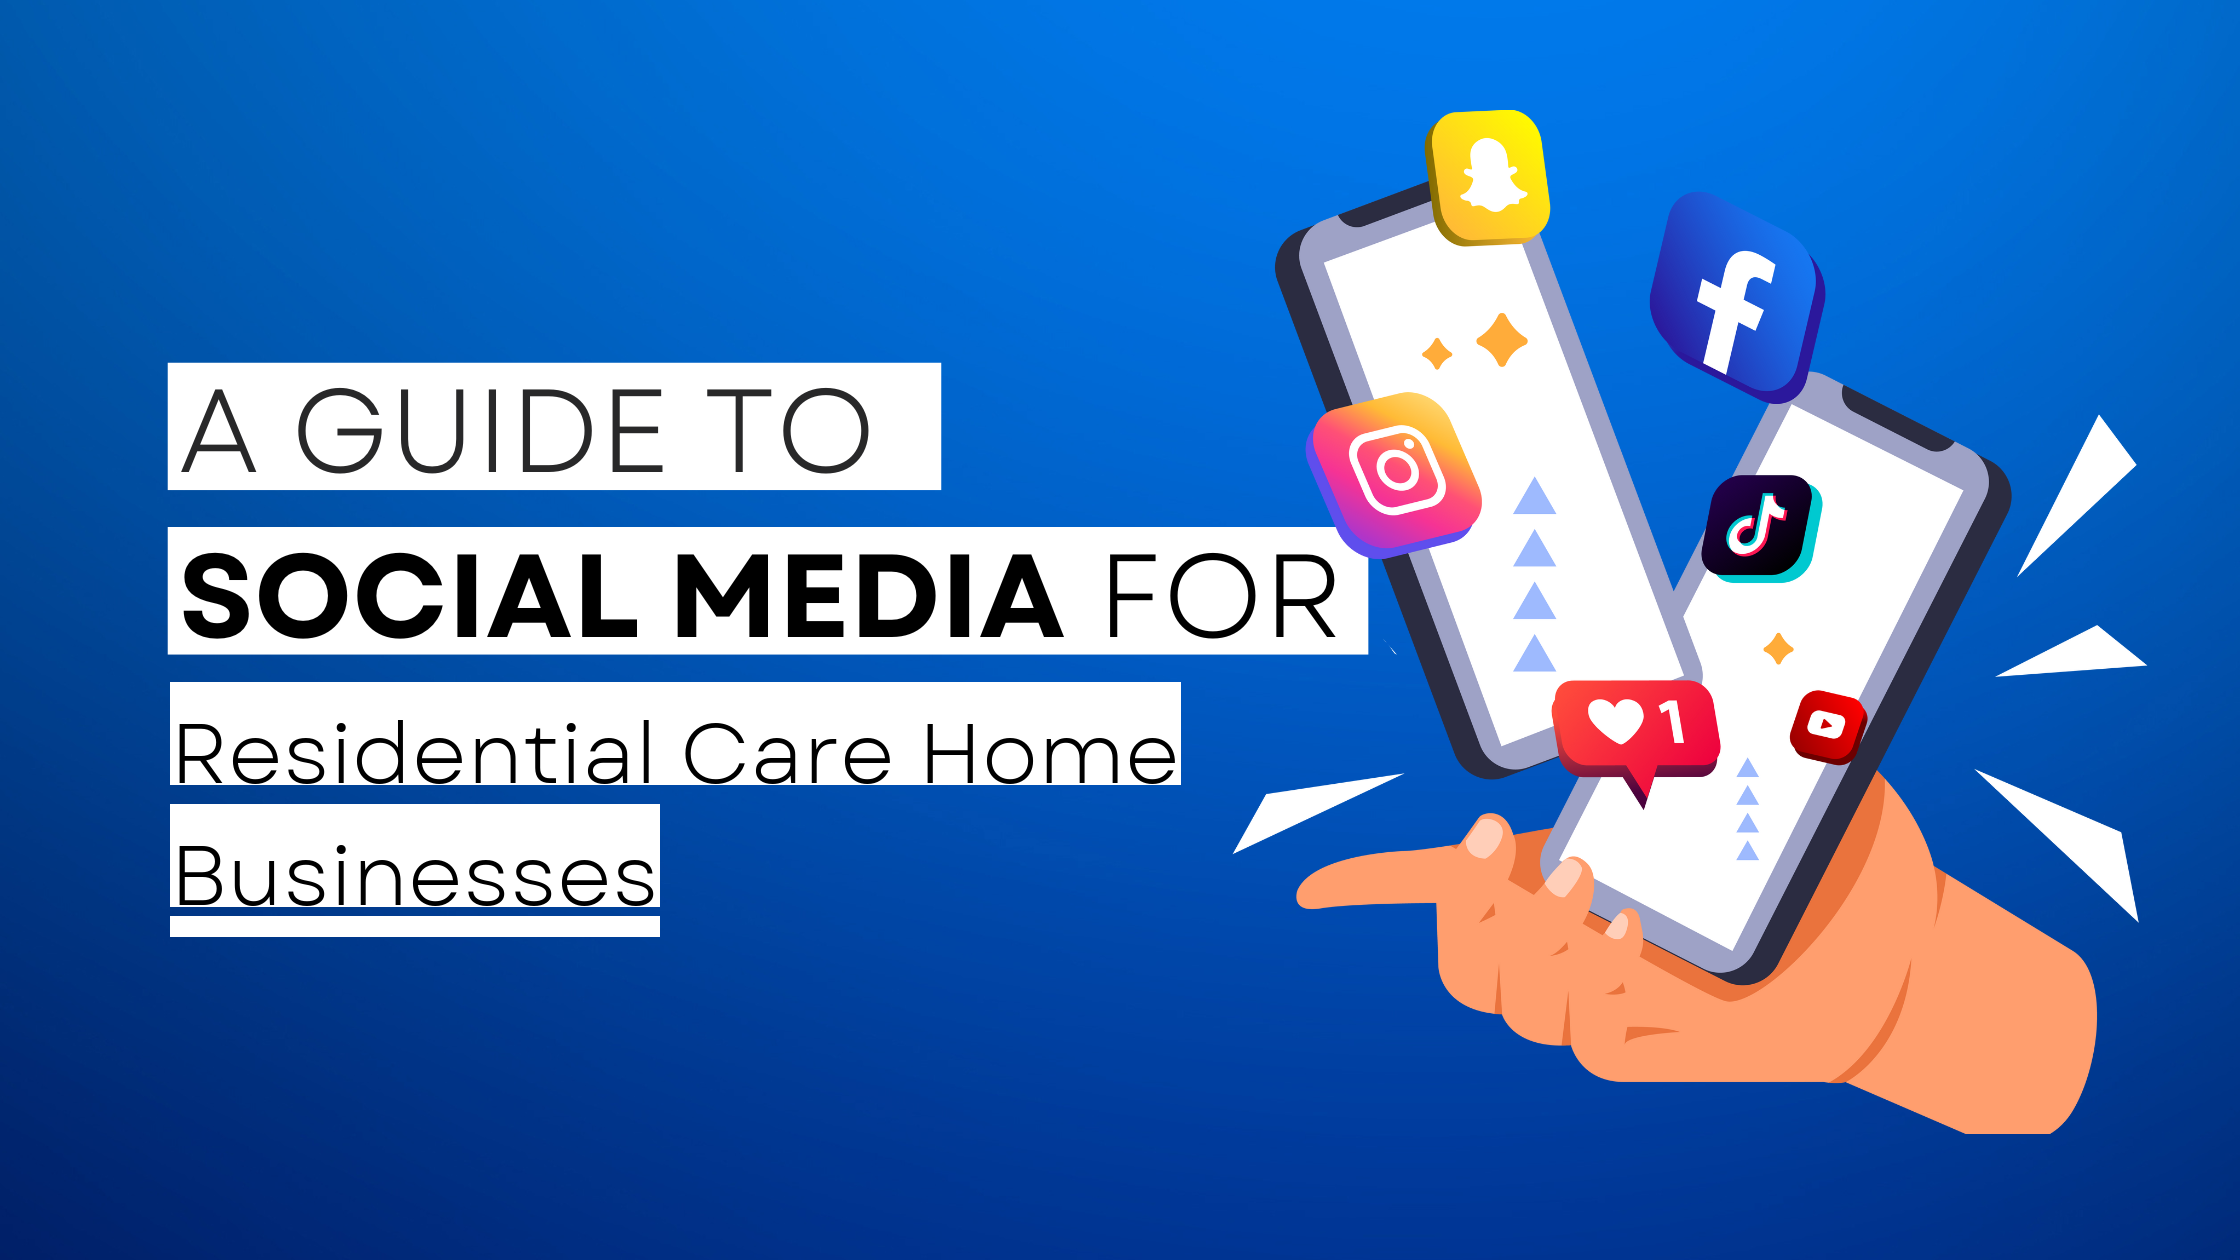 How to start Residential Care Home on social media